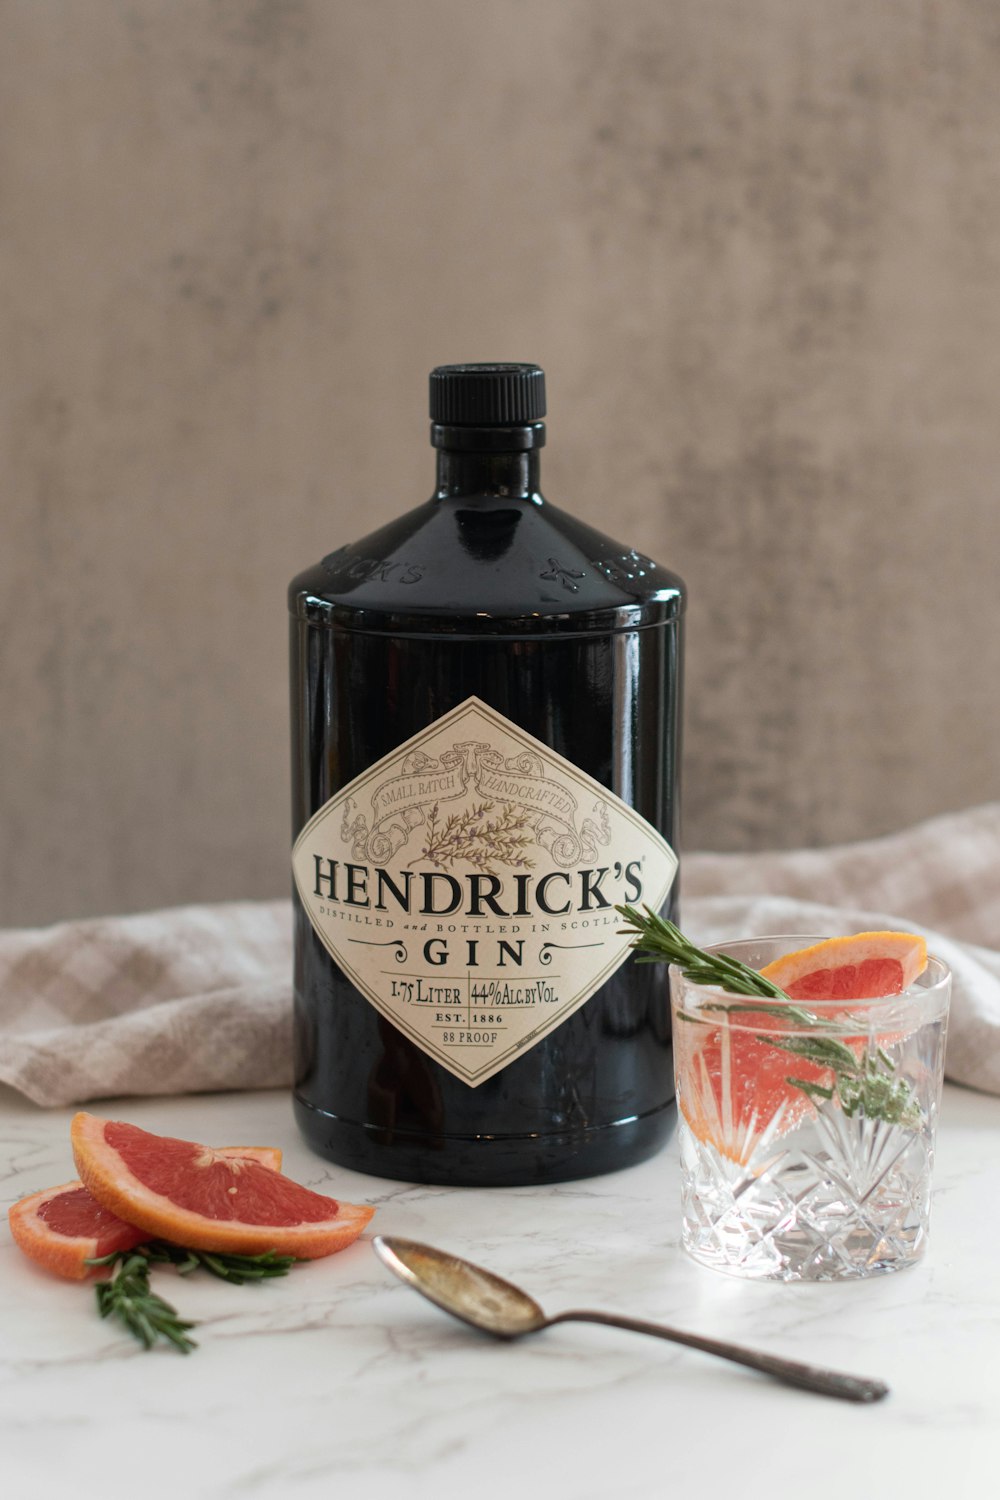 a bottle of hendirick's gin with grapefruit garnish